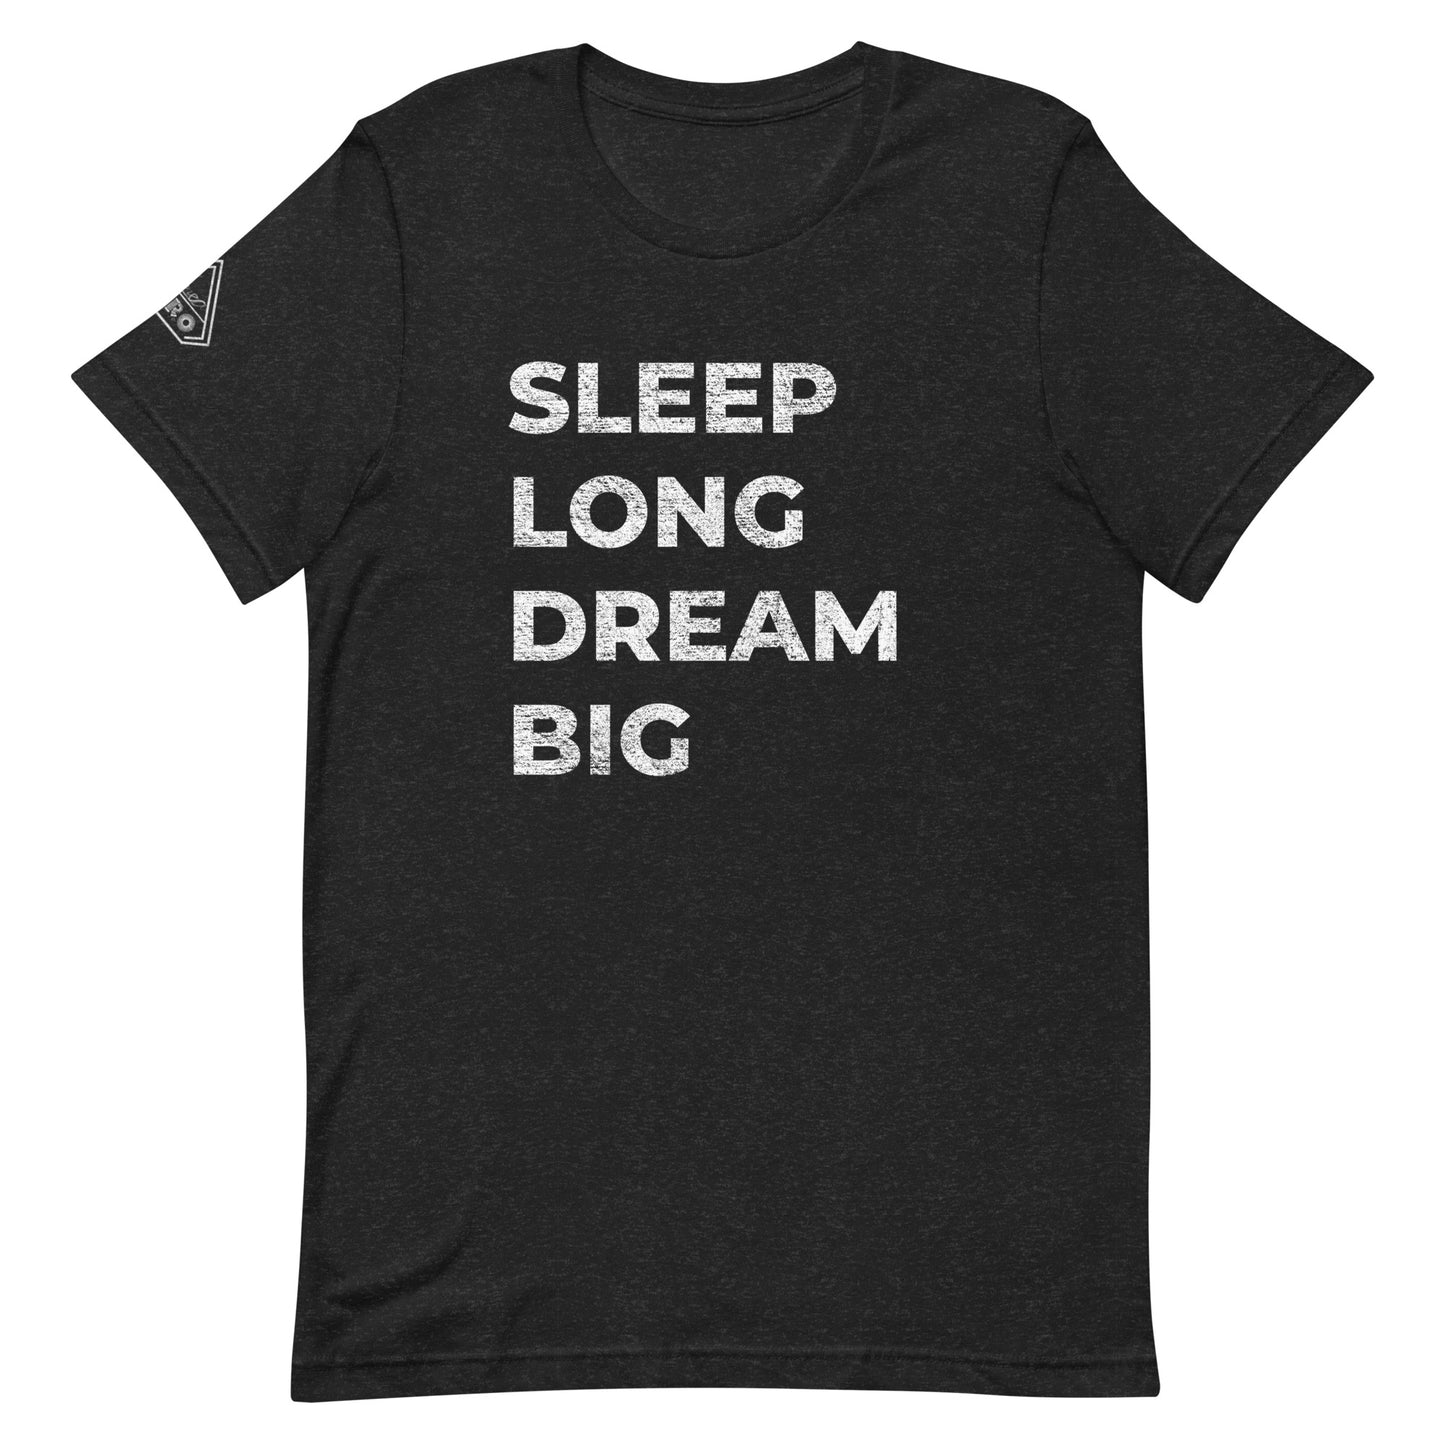 SLEEP LONG DREAM BIG, Graphic Tee Shirt, Black